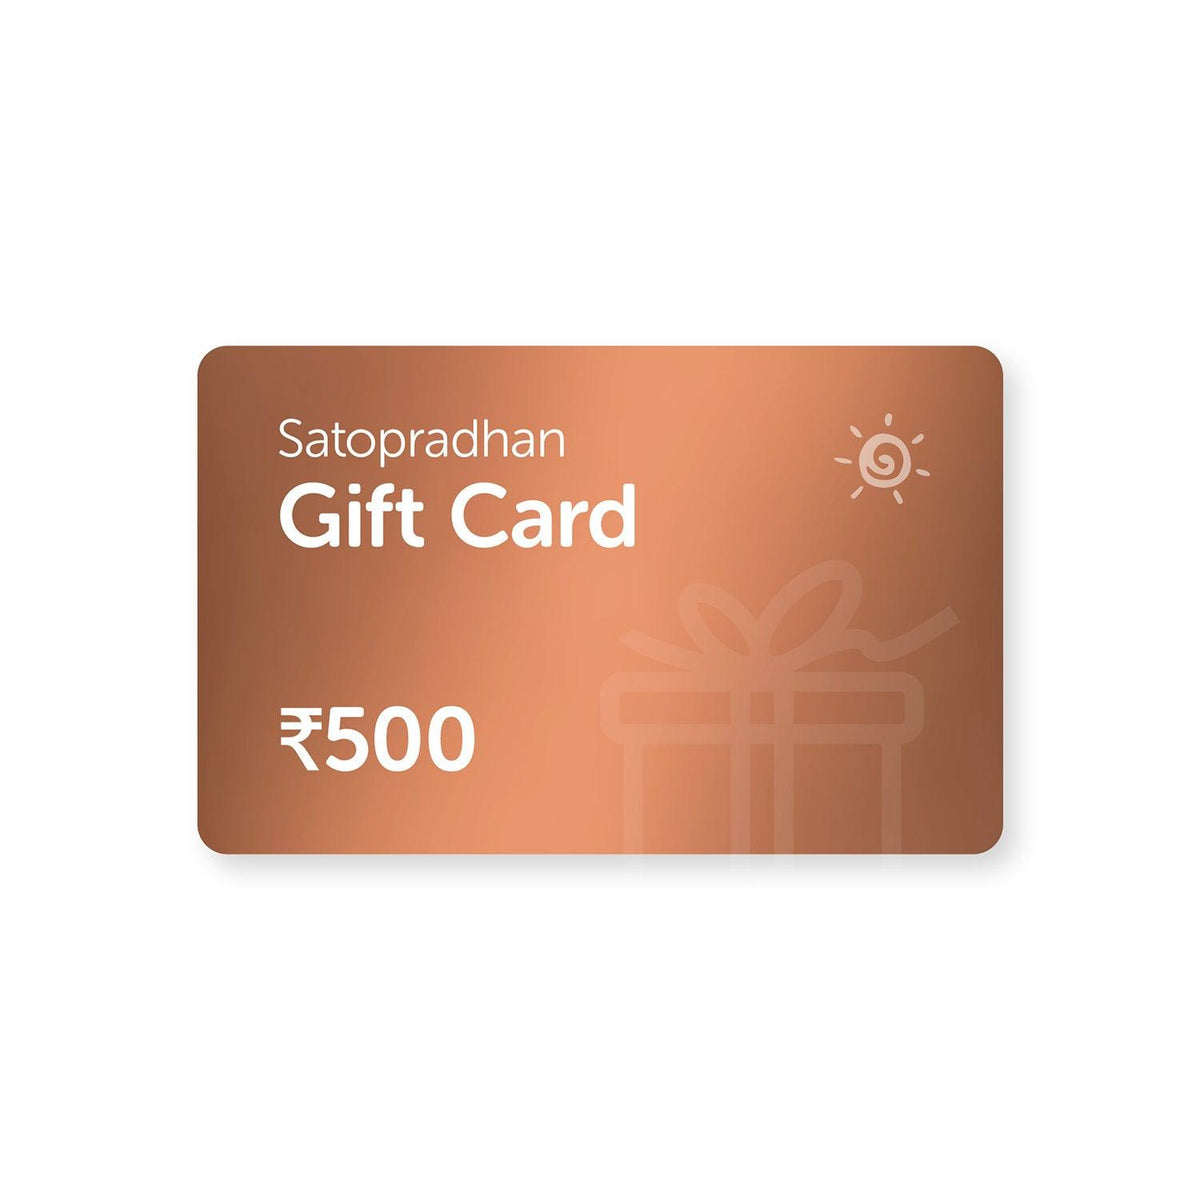 Satopradhan Gift Card - Simplify Gifting with Gift Voucher! - Satopradhan